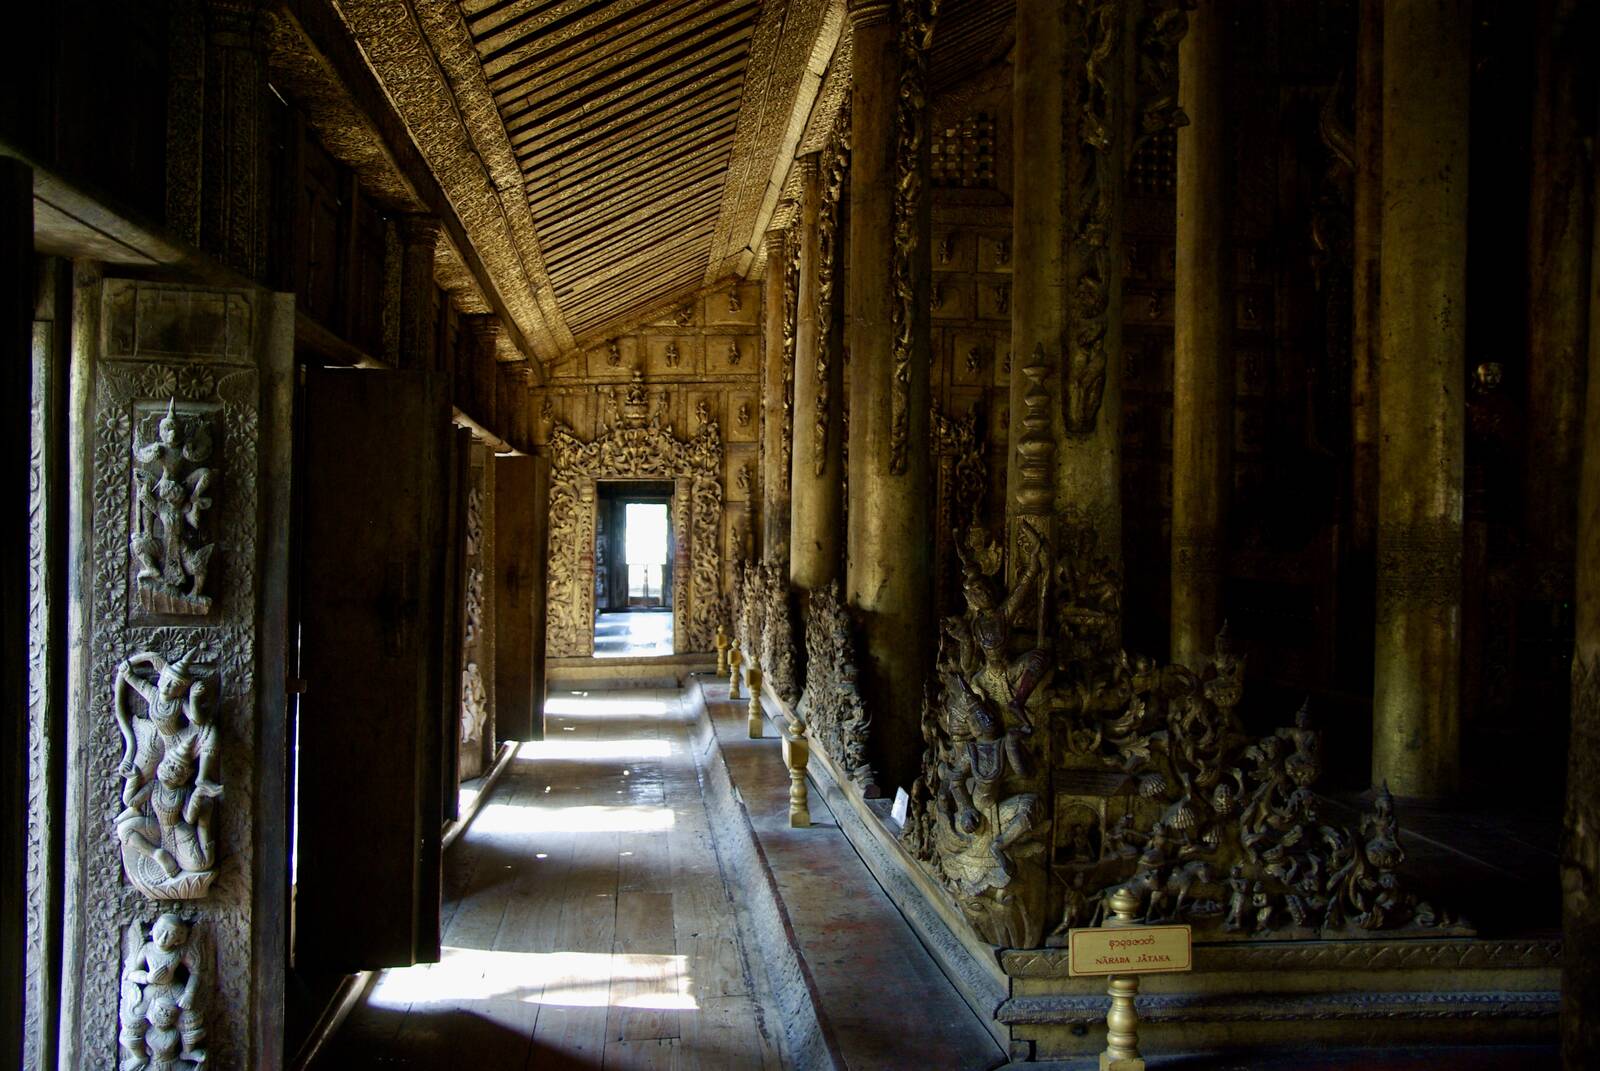 Image of Shwe Nan Daw Kyaung Monastery by Nigel Shaw